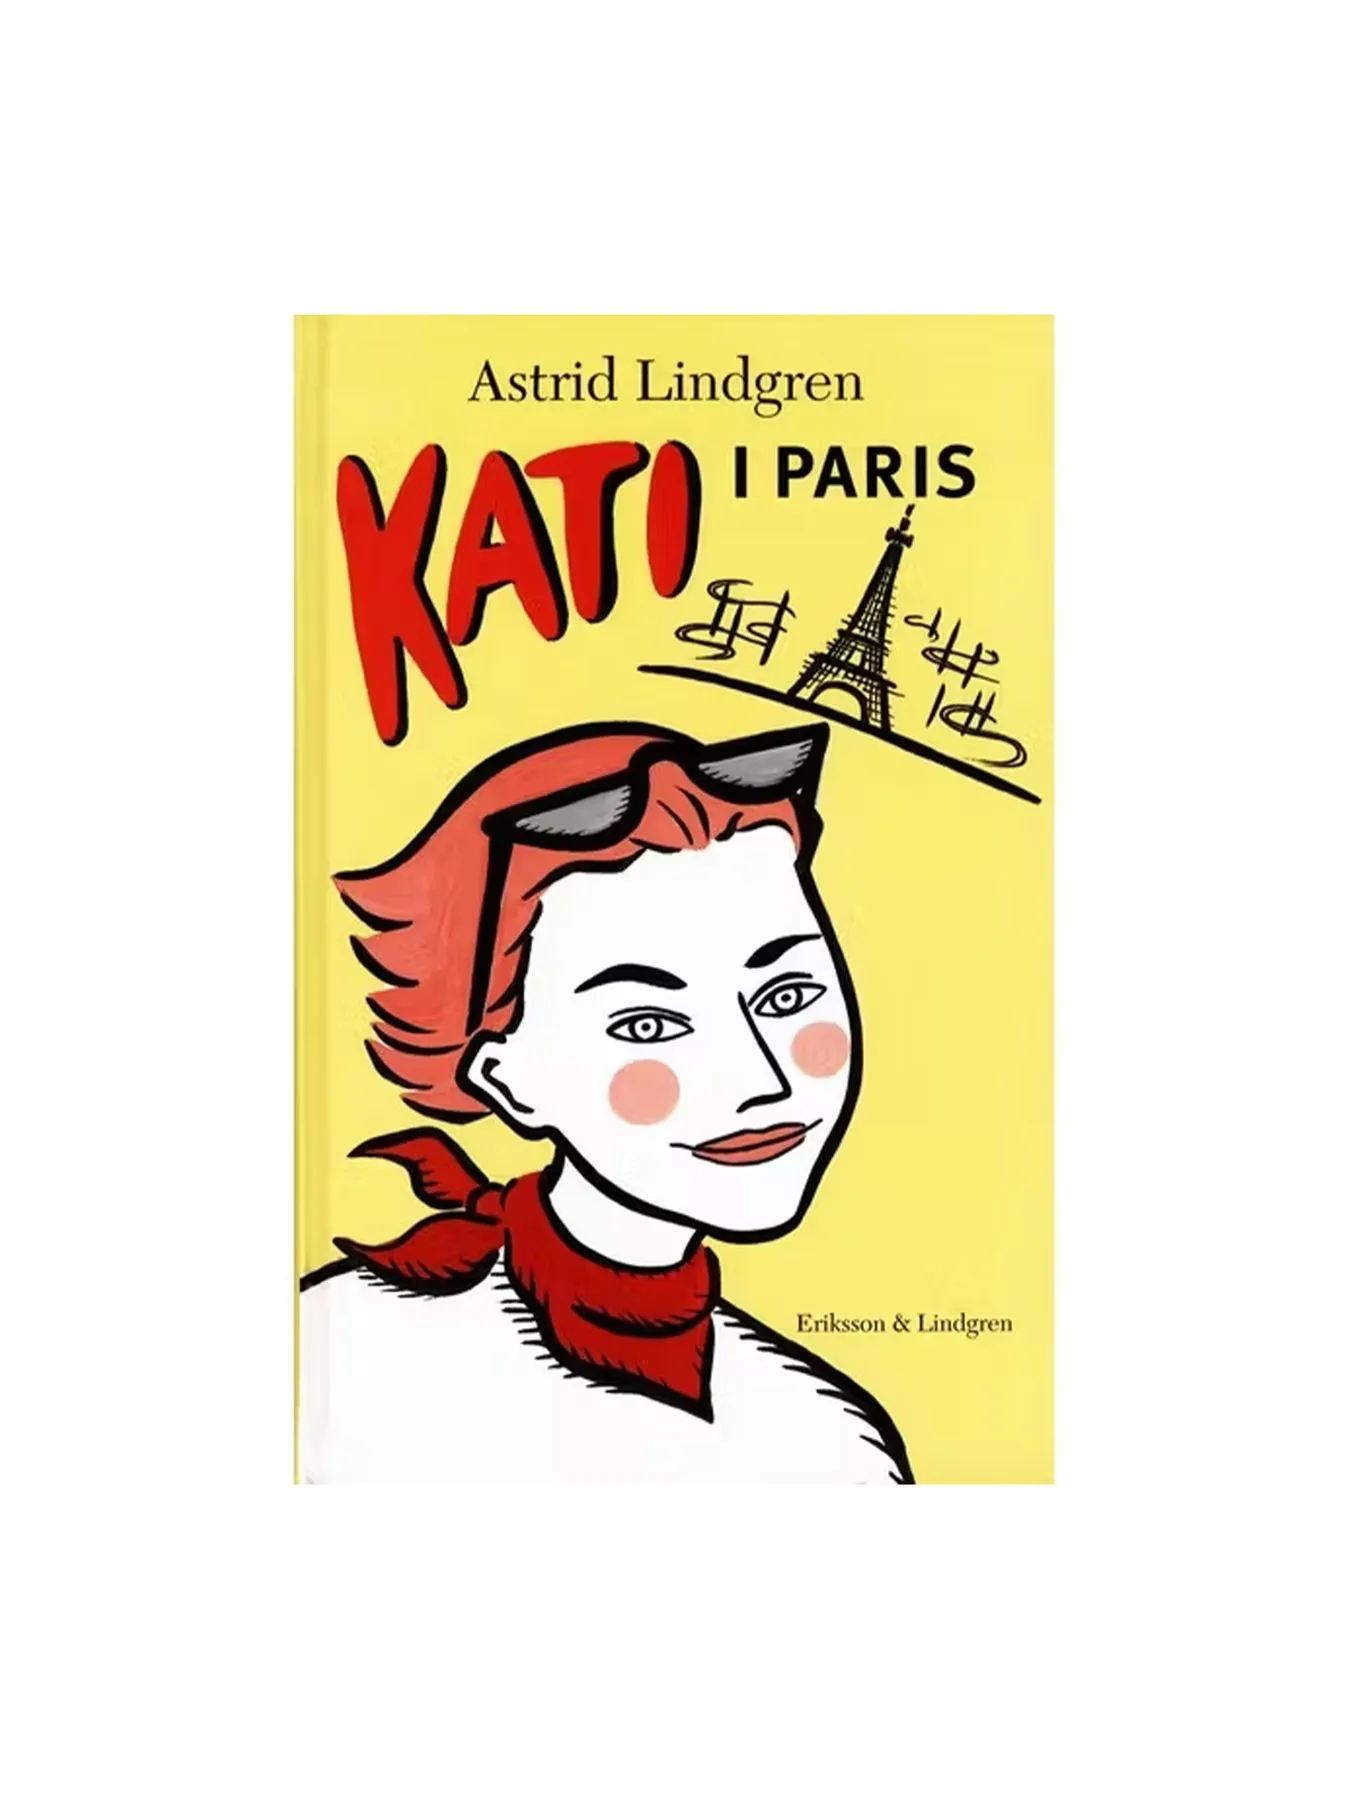 Kati i Paris